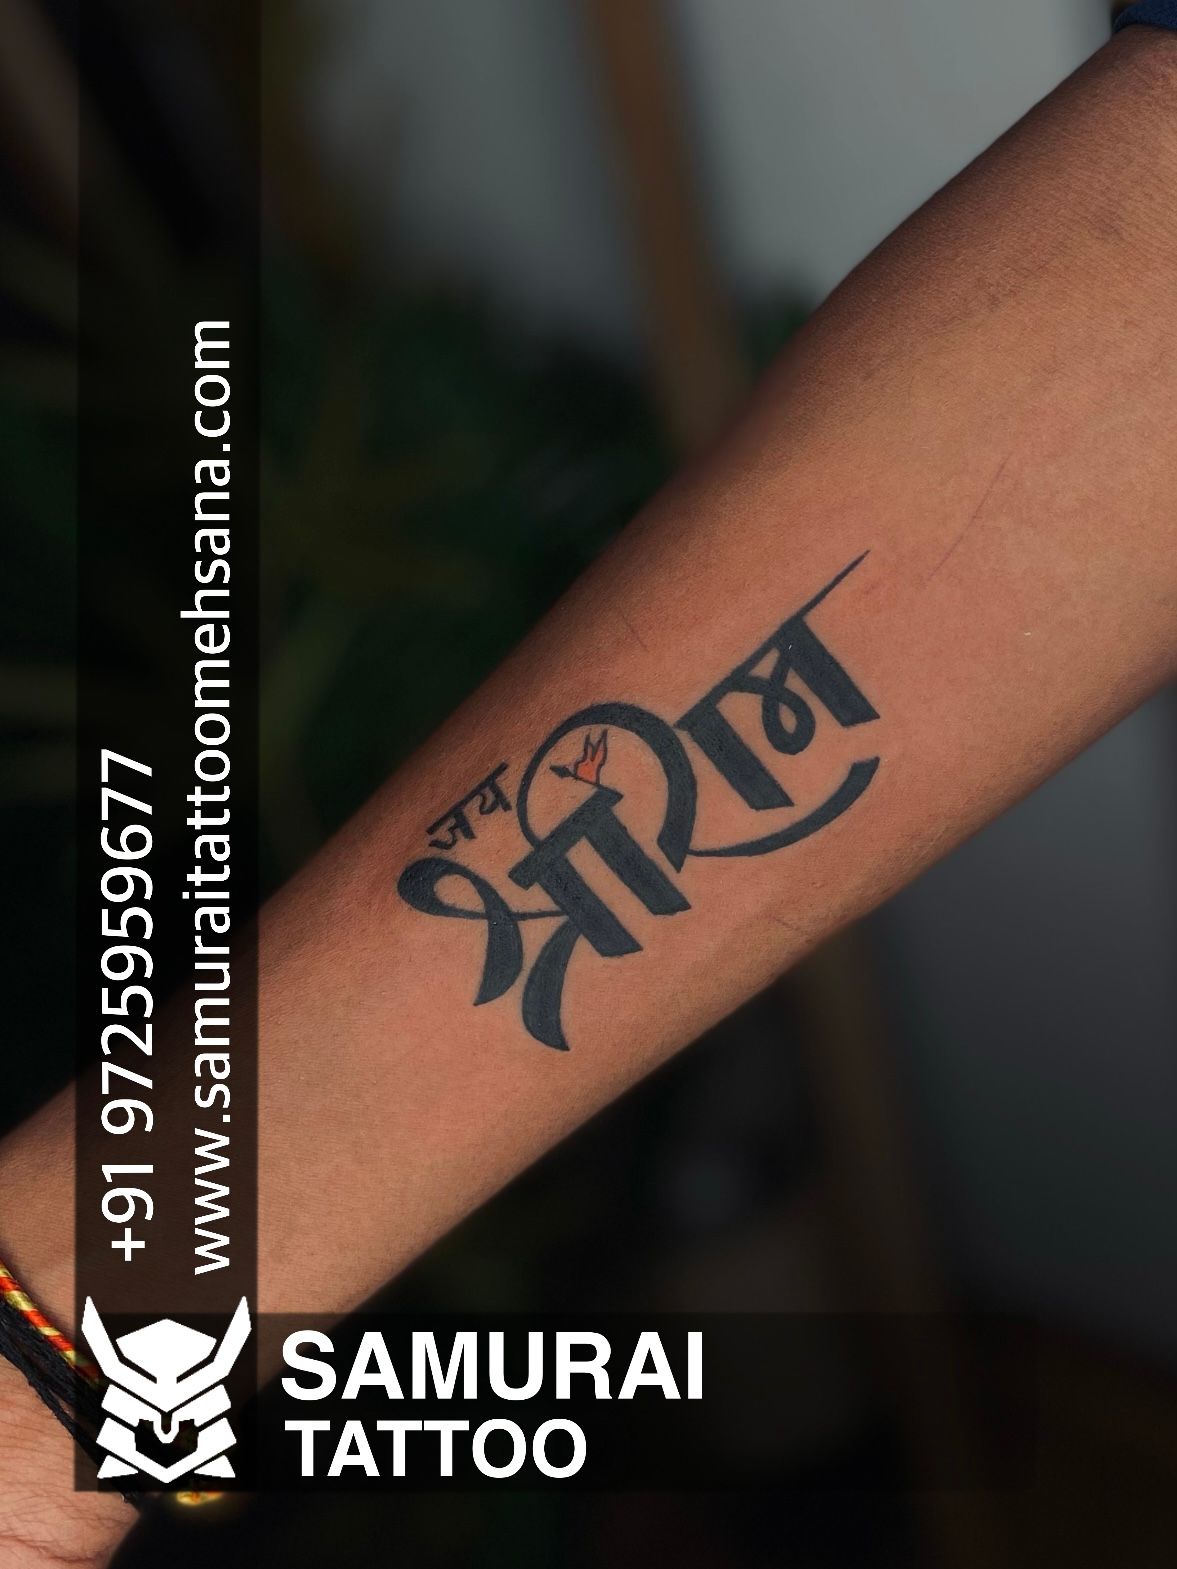 Kuljeet name Punjab font tattoo | Name tattoos, Small tattoos for guys, Tattoo  fonts